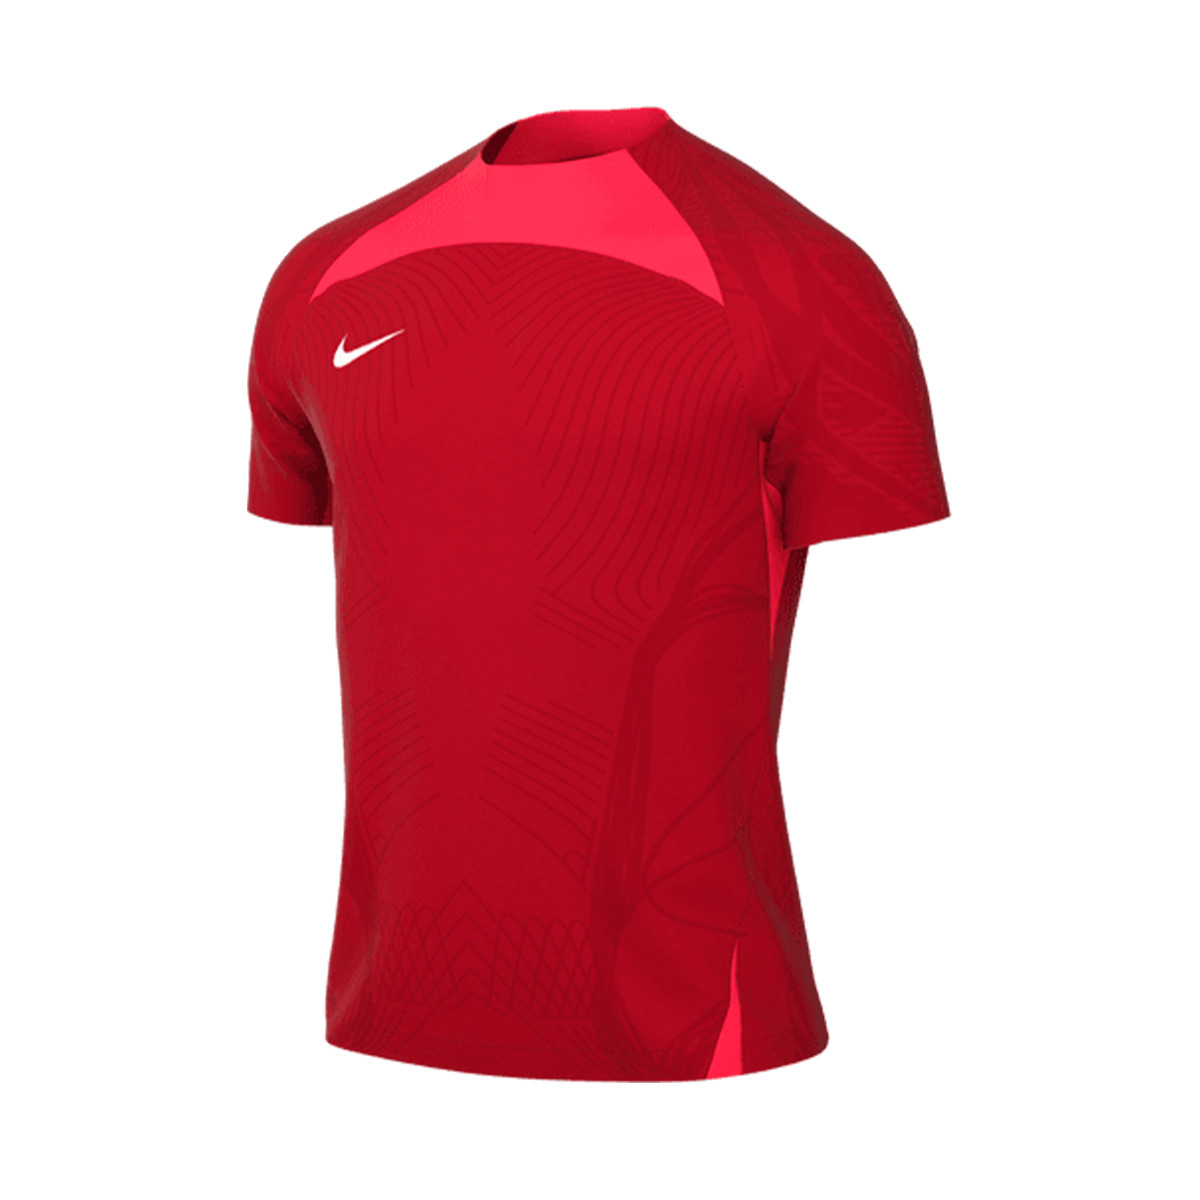 Camiseta Nike Vaporknit m/c crimson-White - Fútbol Emotion